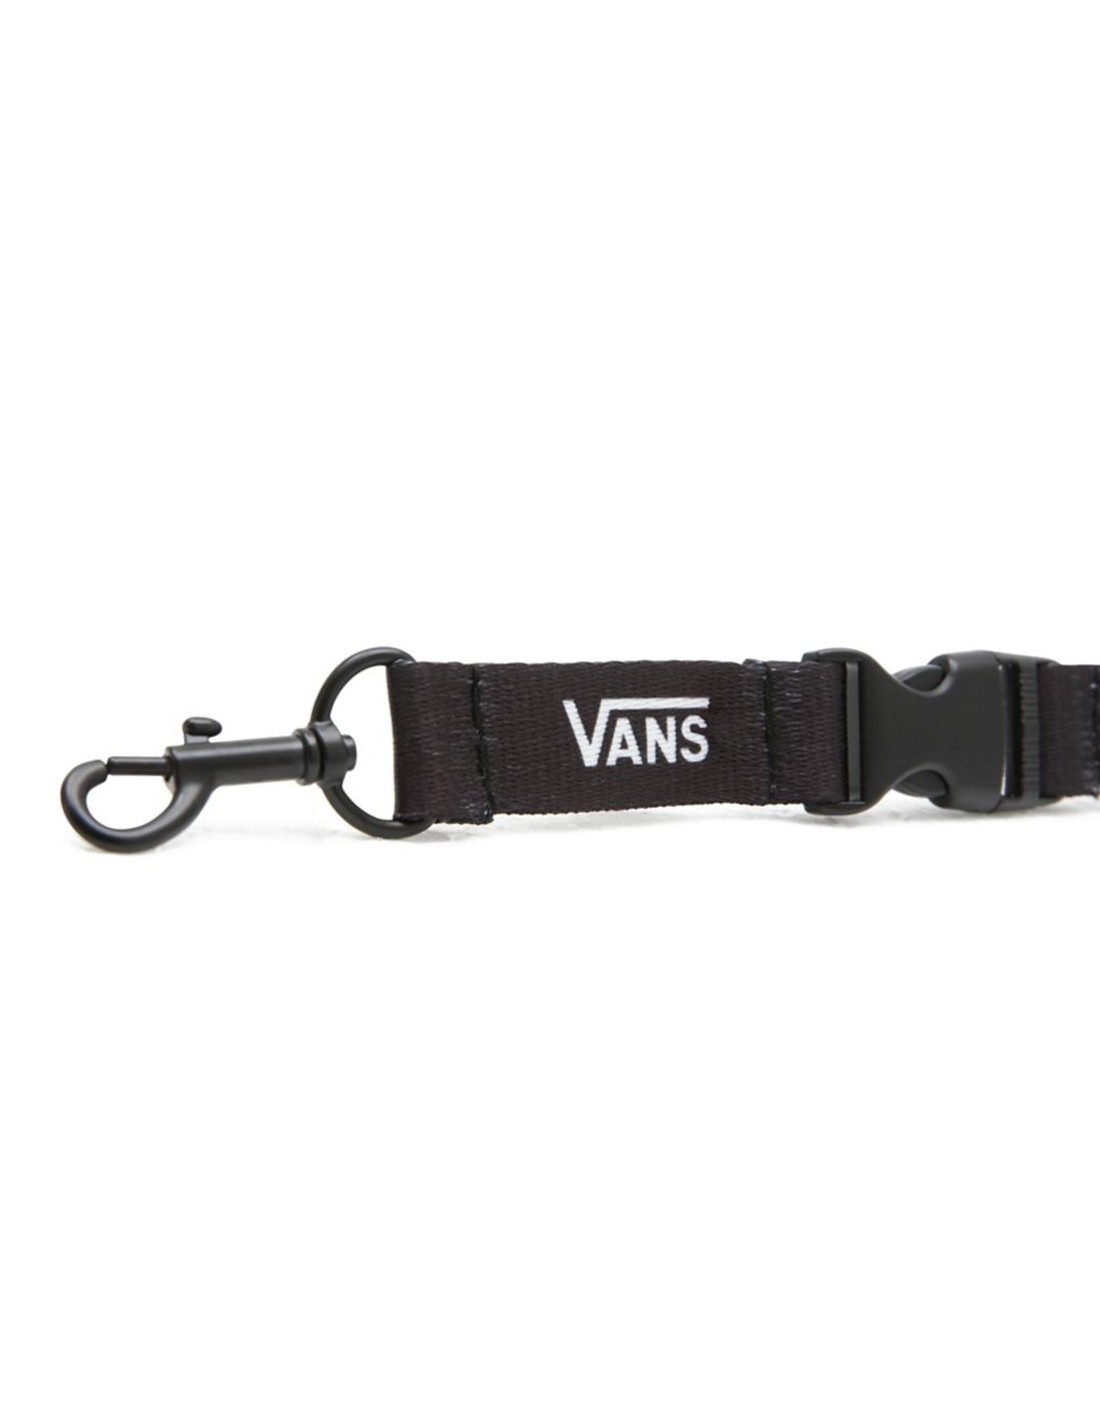 Vans Slip On Keychain, Black, White